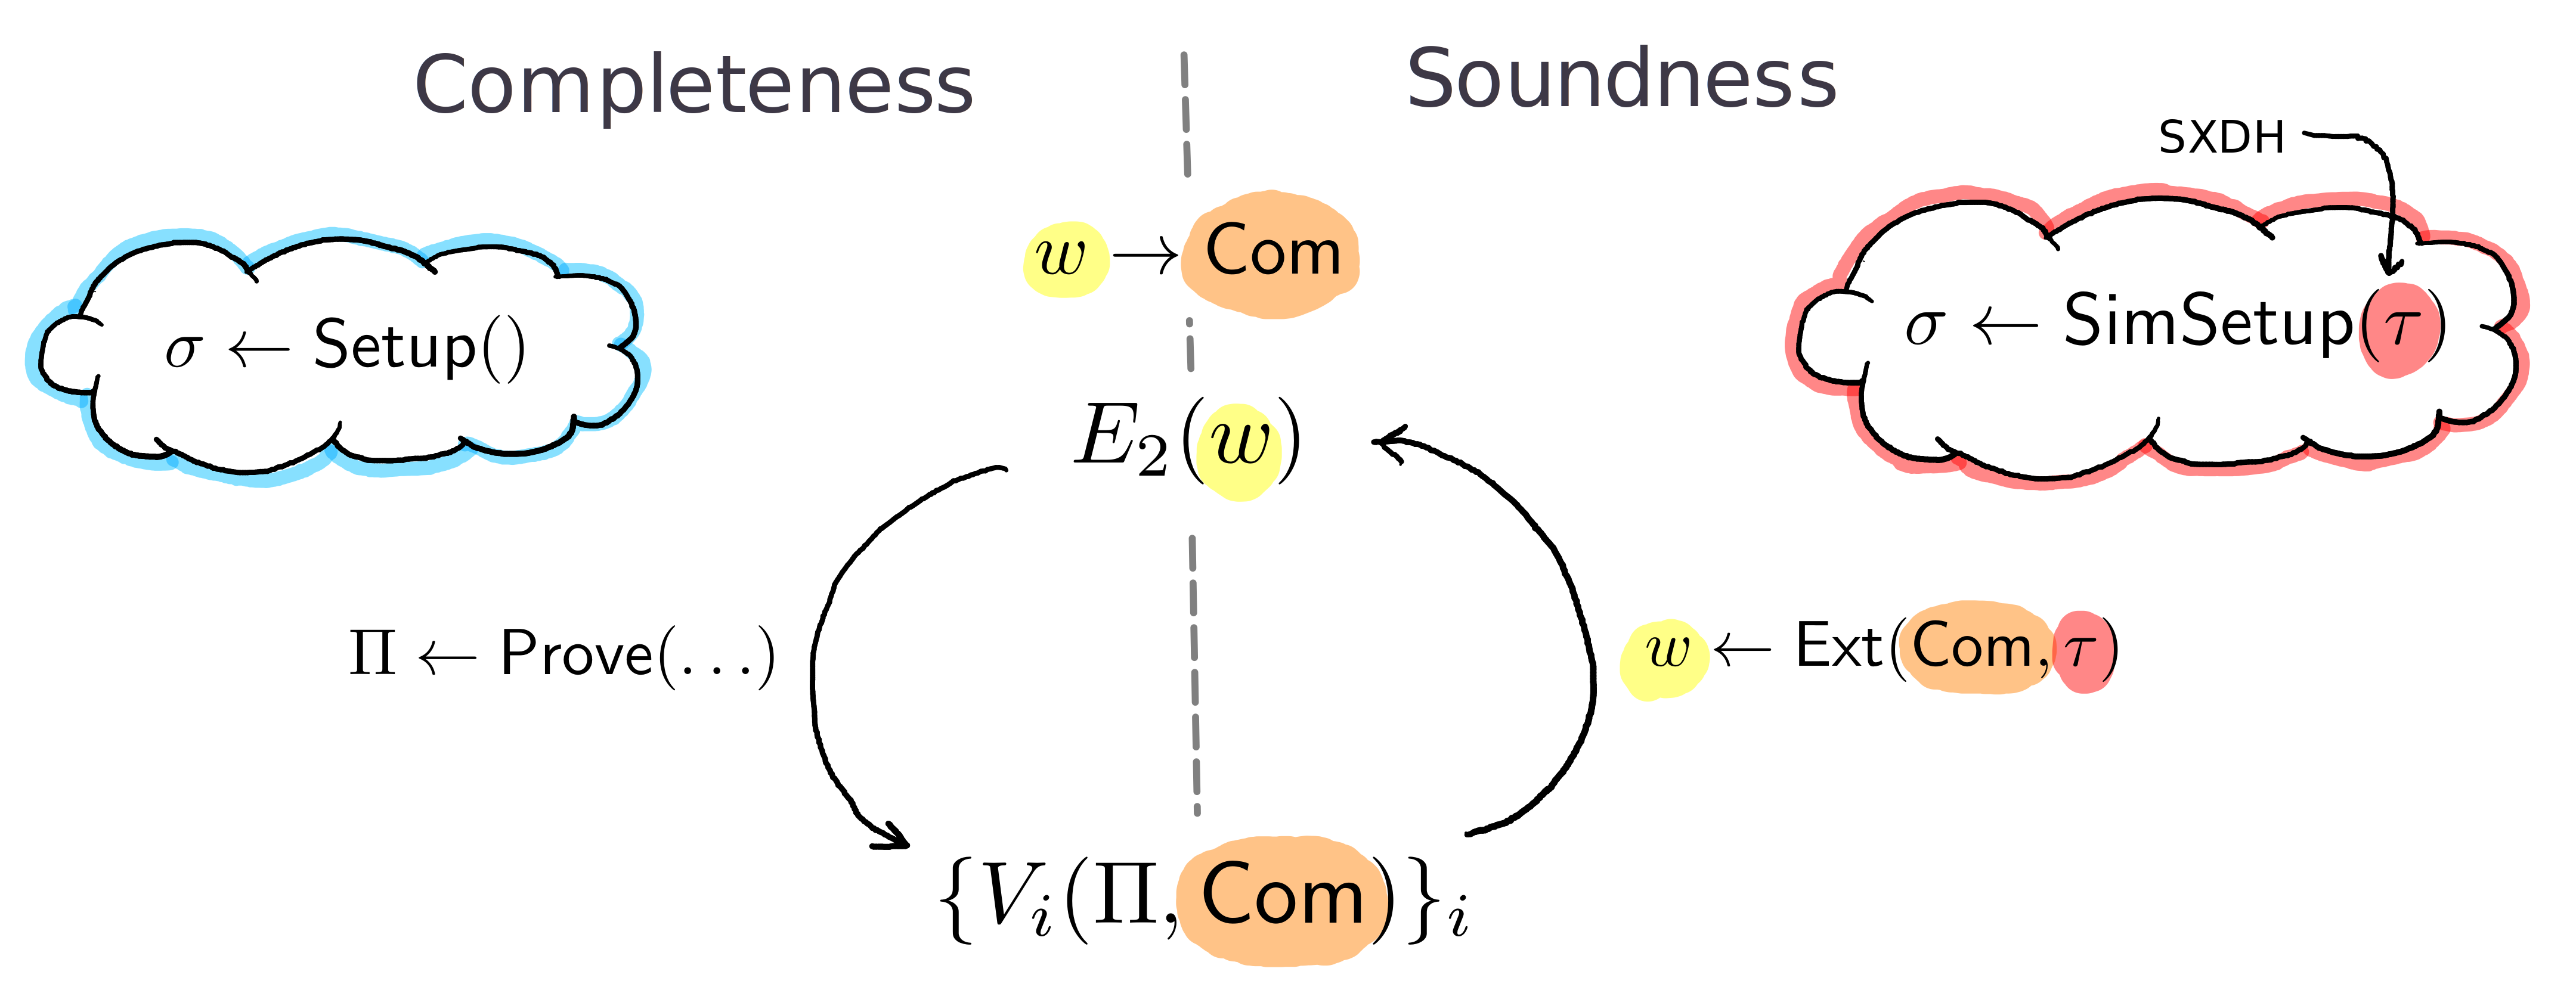 Soundness Illustration